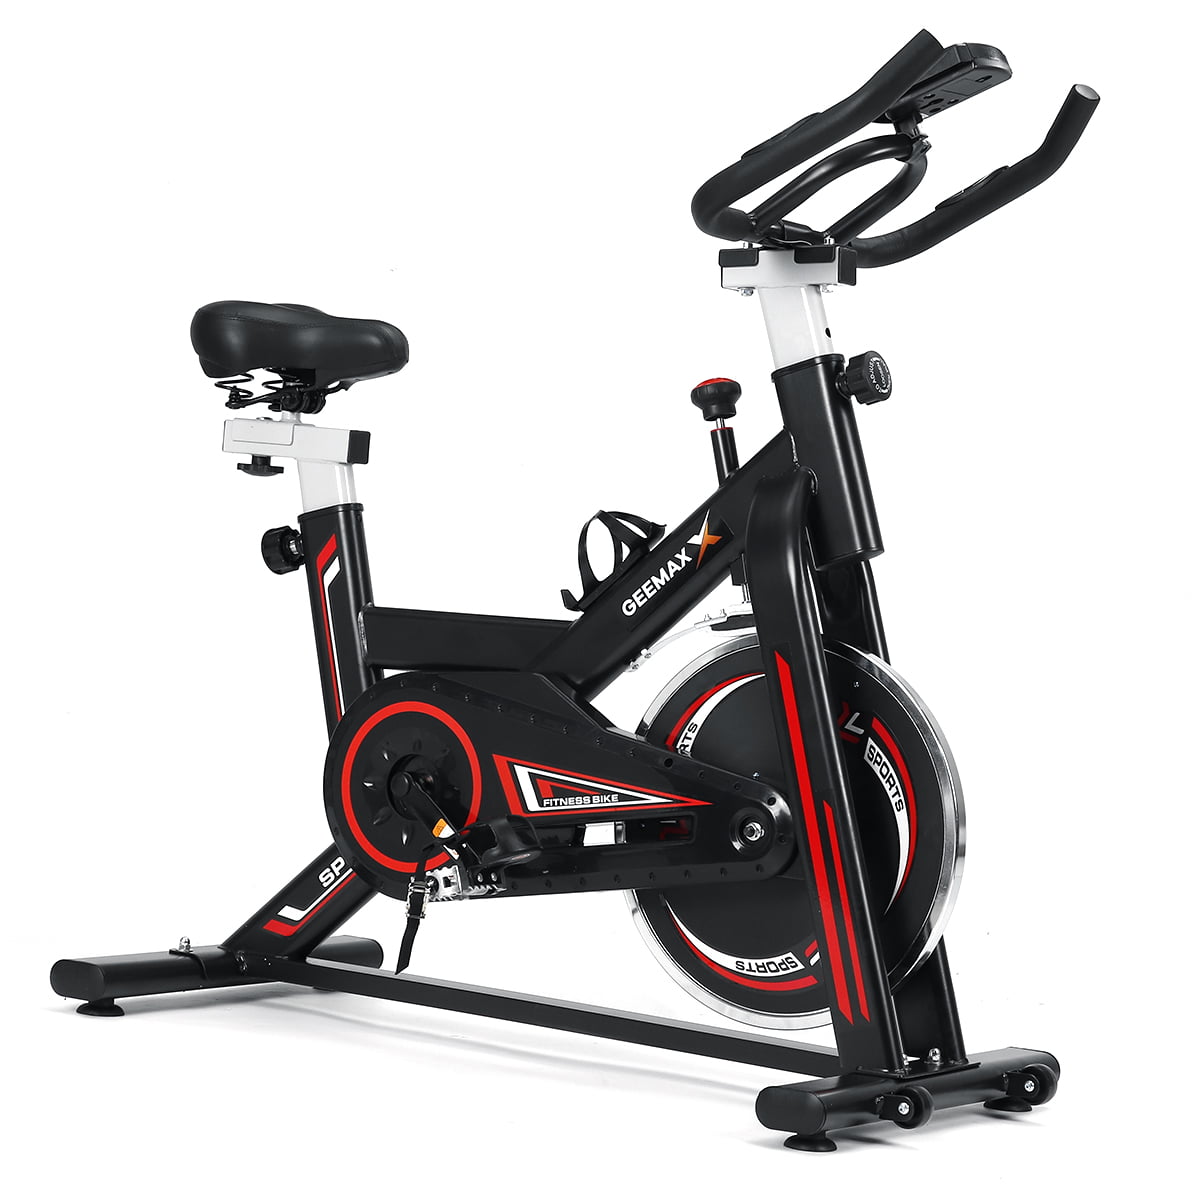 UK 5/8KG Flywheel Gym Exercise Bike Studio Cycle Indoor Training Sport Workout 